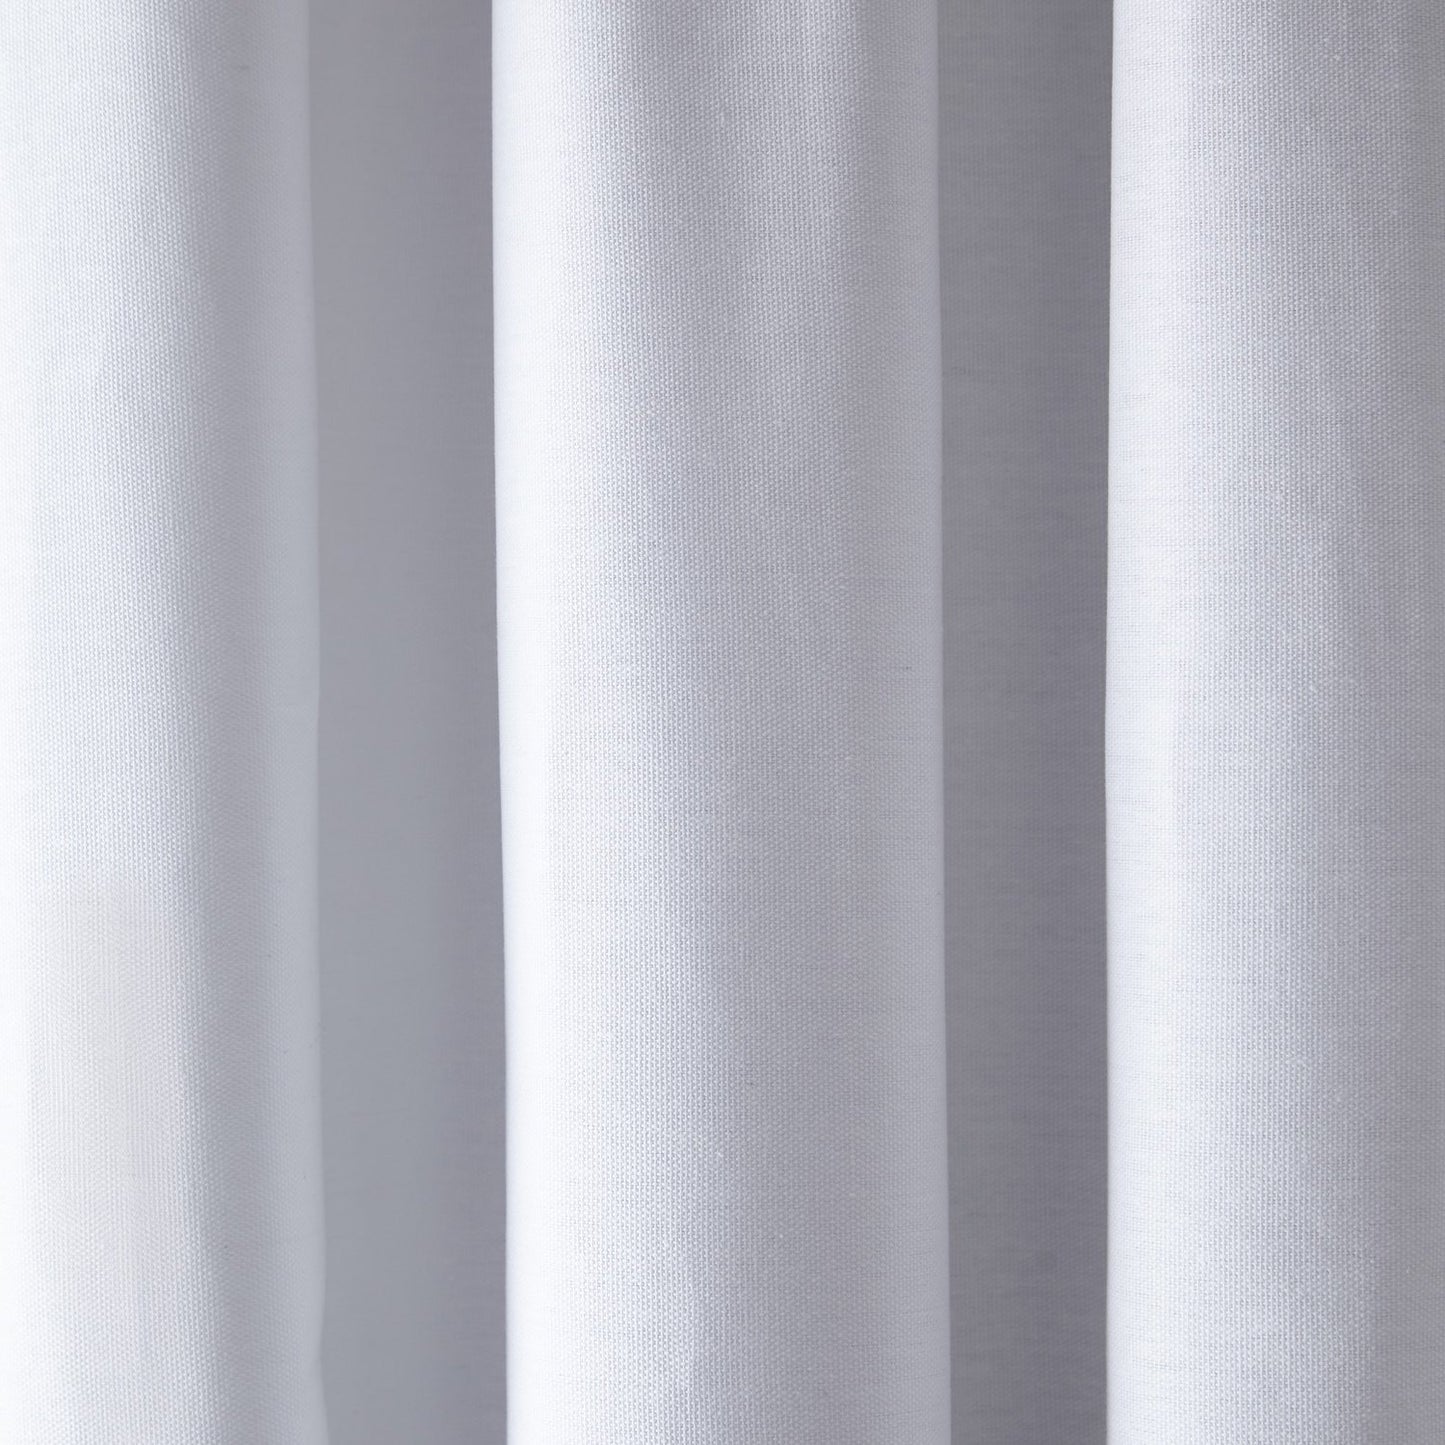 Dijon White Blackout Pencil Pleat Curtains